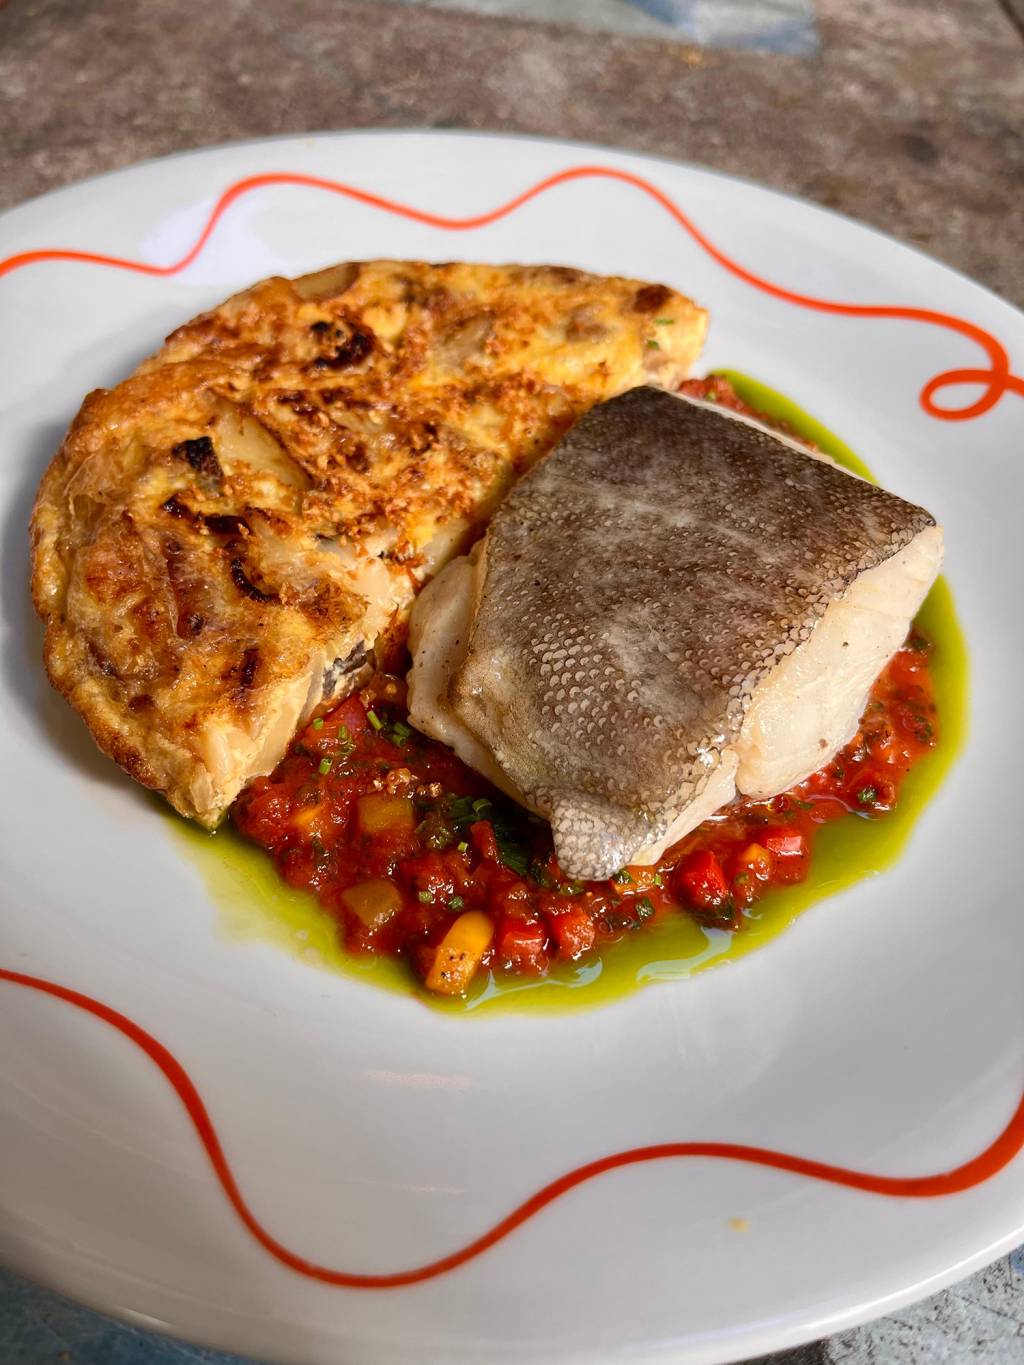 Tasca Miúda: dupla ibérica de bacalhau e tortilla no prato